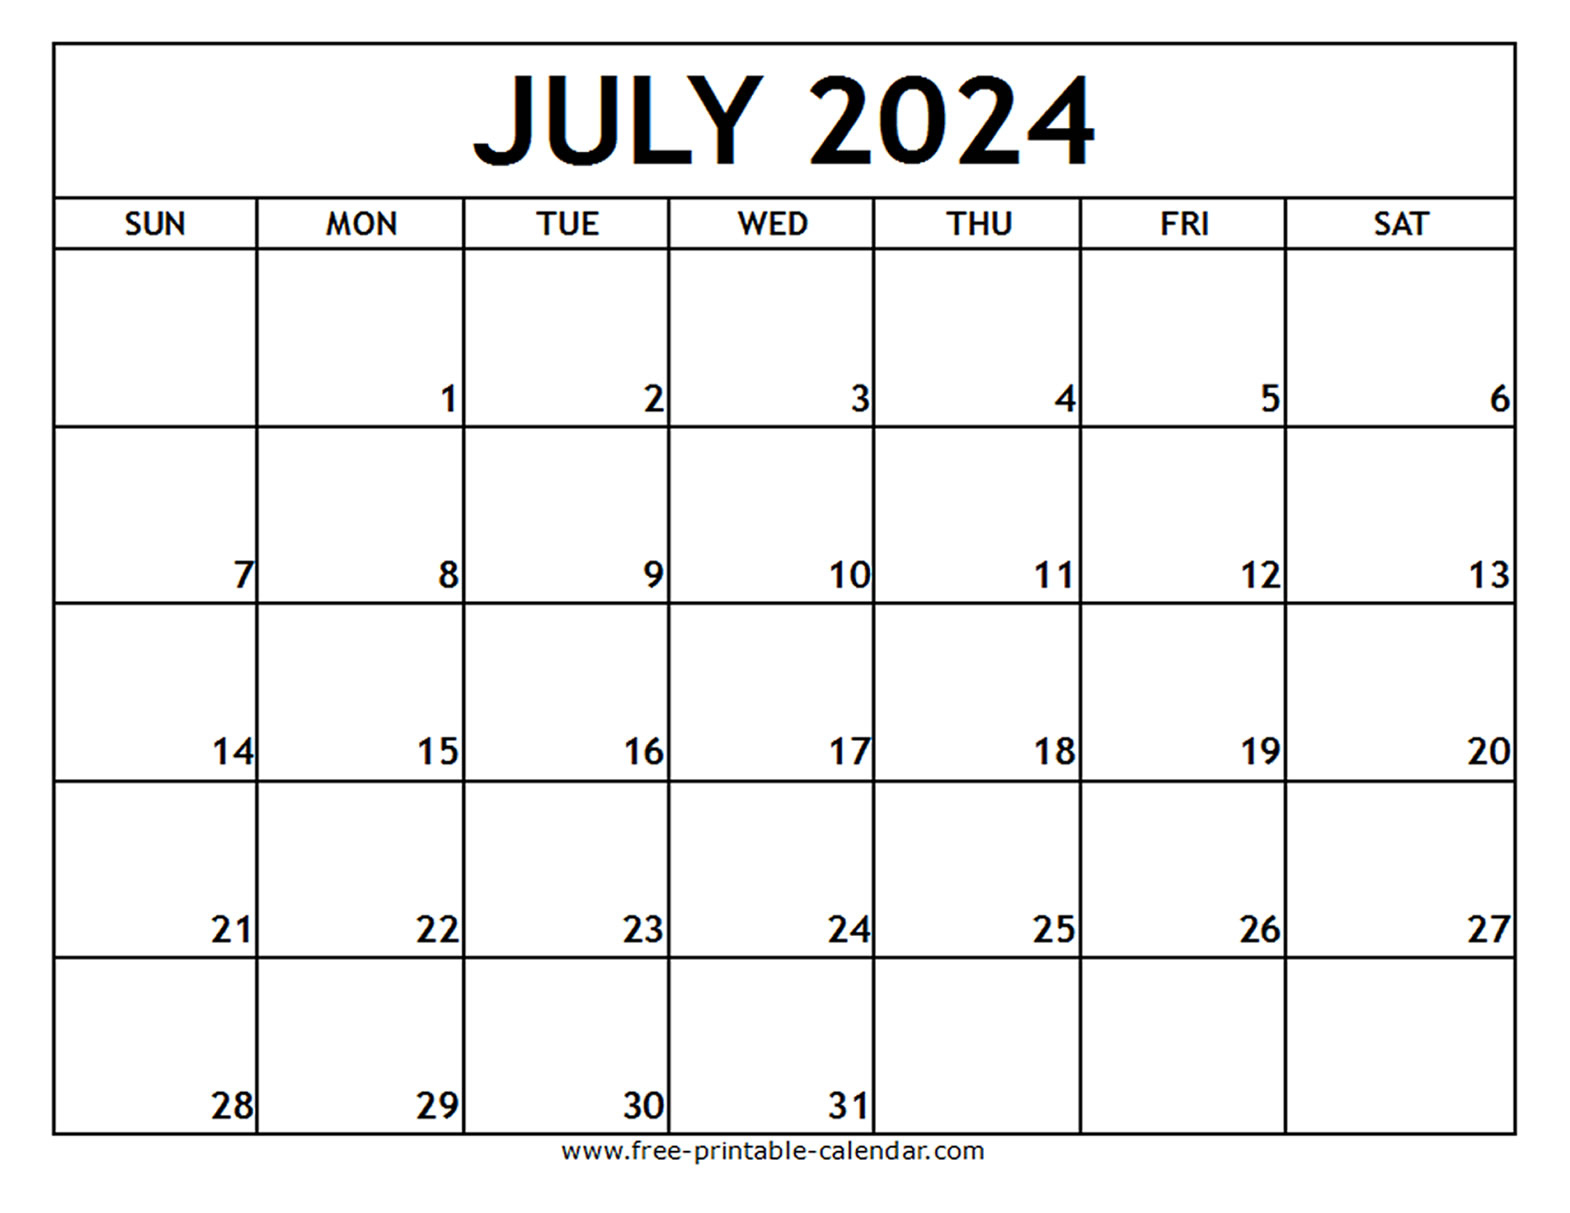 July 2024 Printable Calendar - Free-Printable-Calendar | July Free Printable Calendar 2024